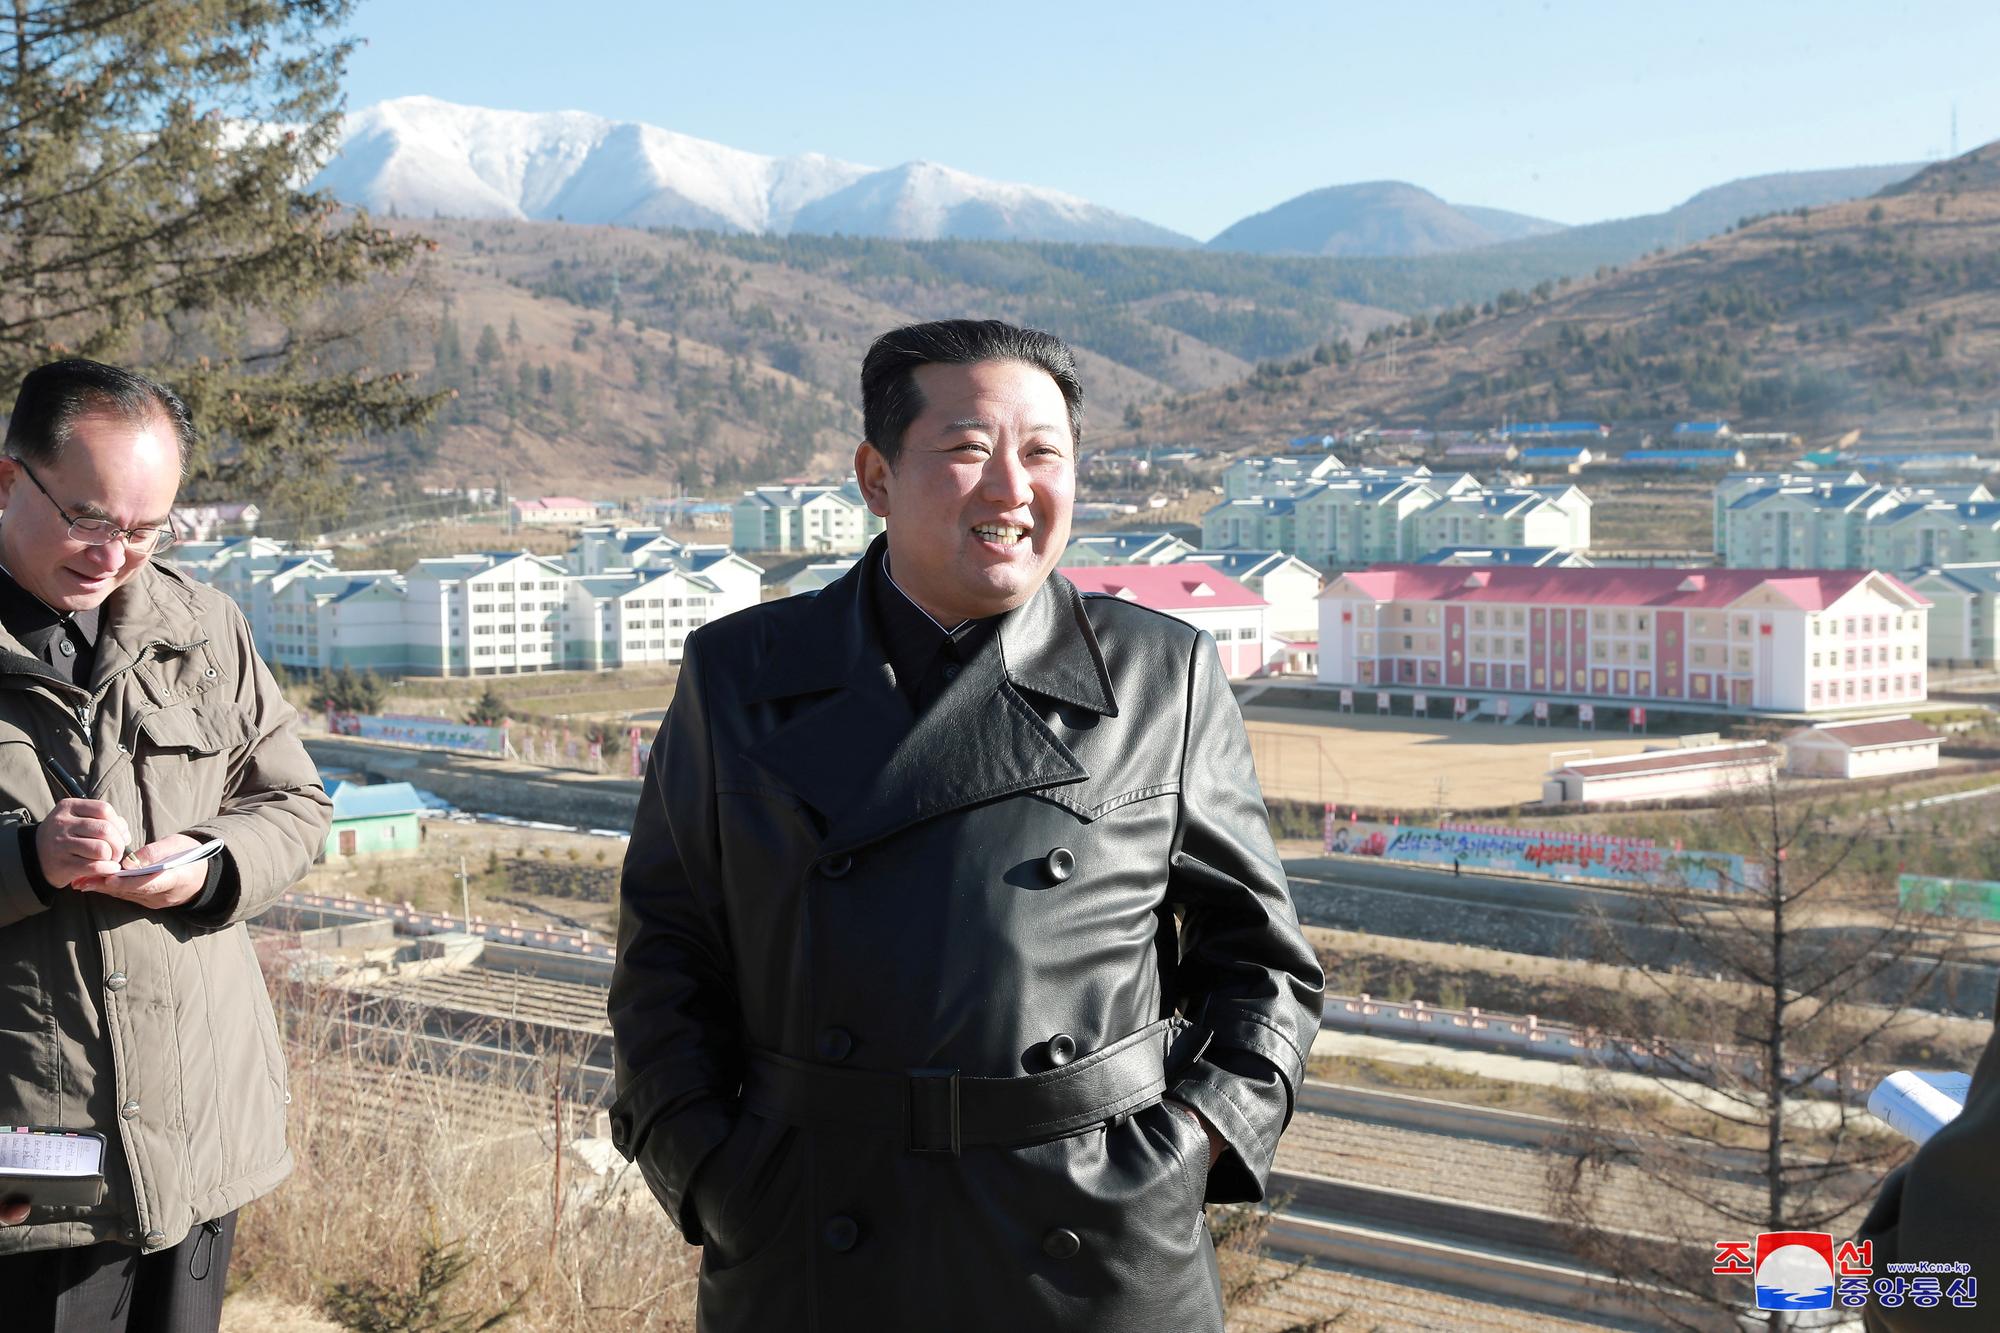 V decembri 2020 Severná Kórea prijala zákon, ktorým tvrdo zakročila proti šíreniu kultúry z kapitalistických krajín.